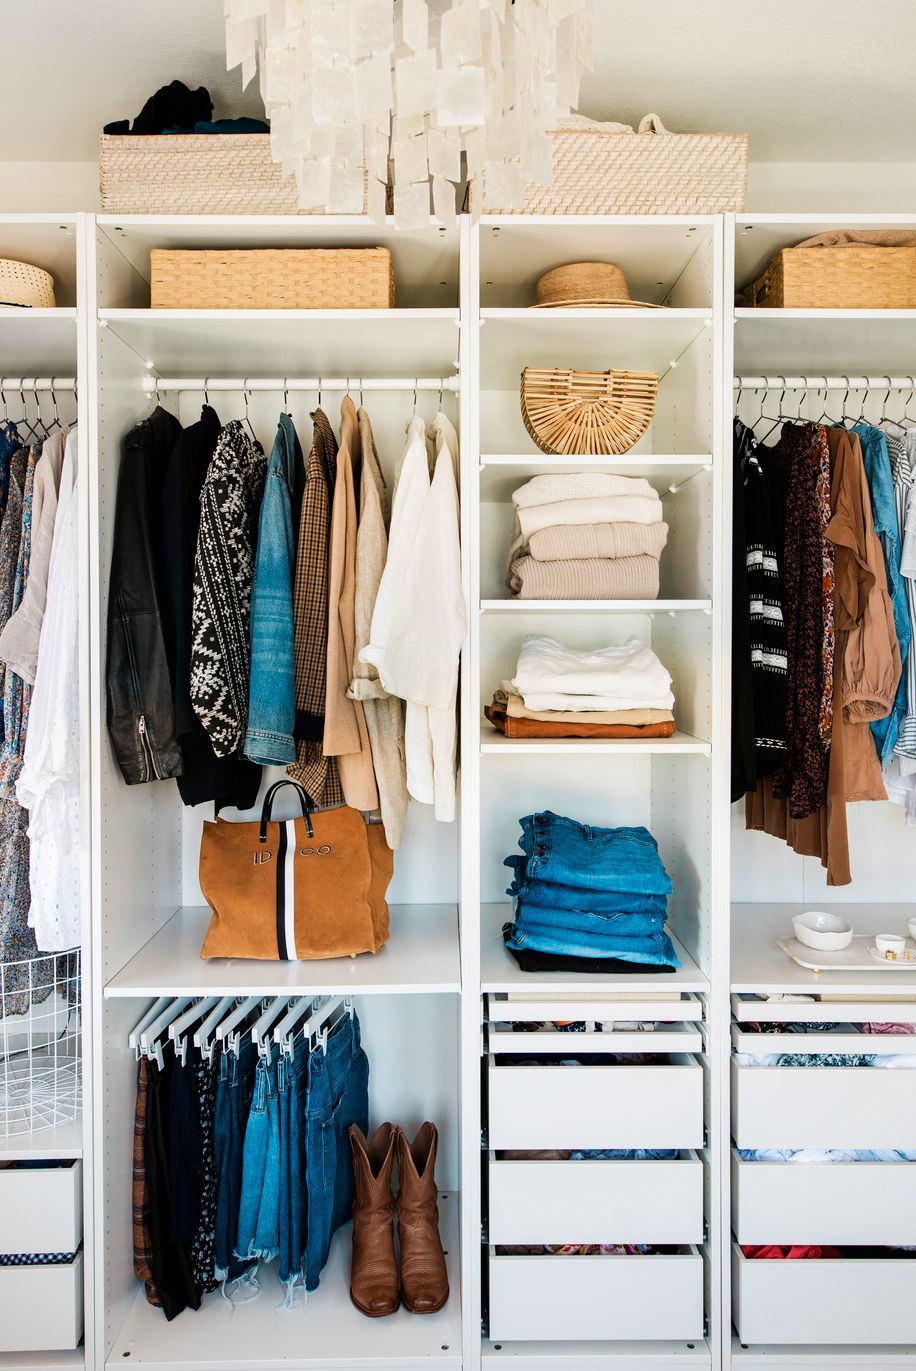 Organized closet with shelves, hangers, storage baskets, drawer storage system and closet organizer